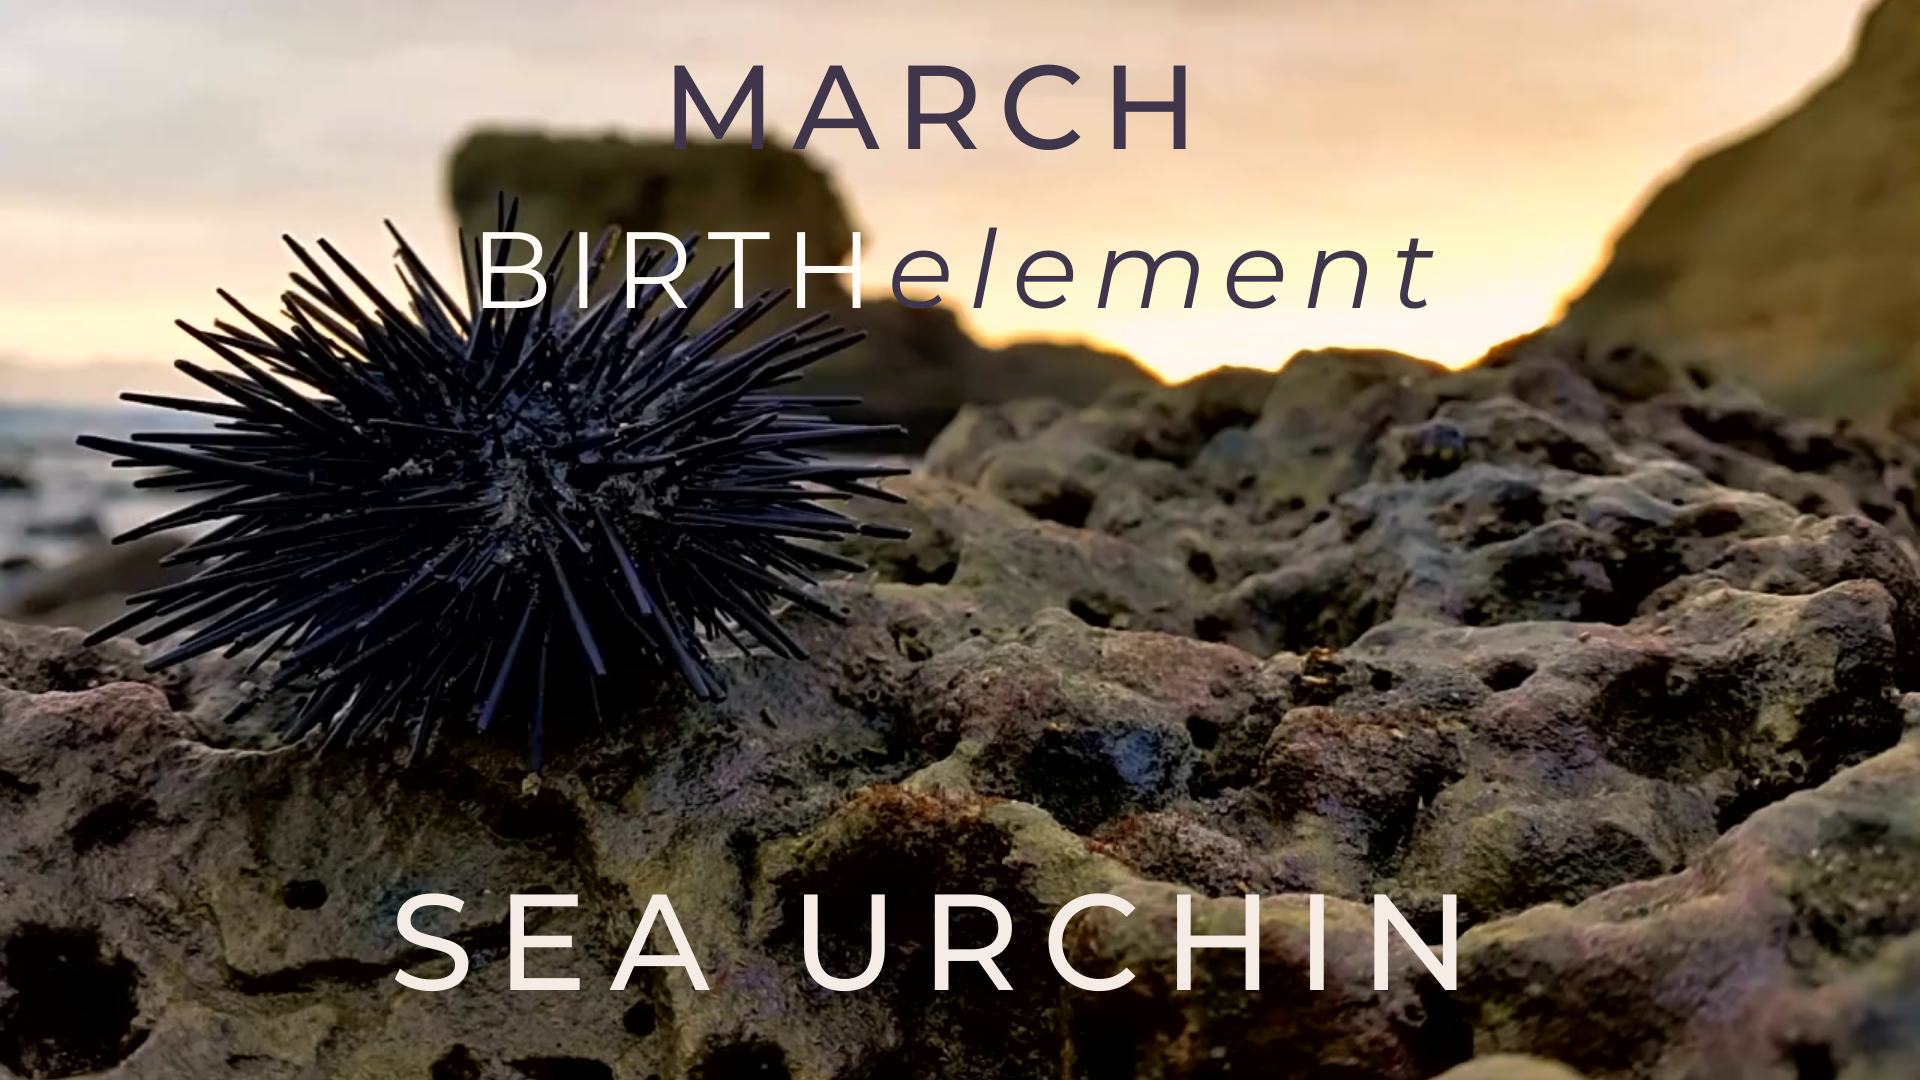 Load video: healing powers of sea urchin jewelry